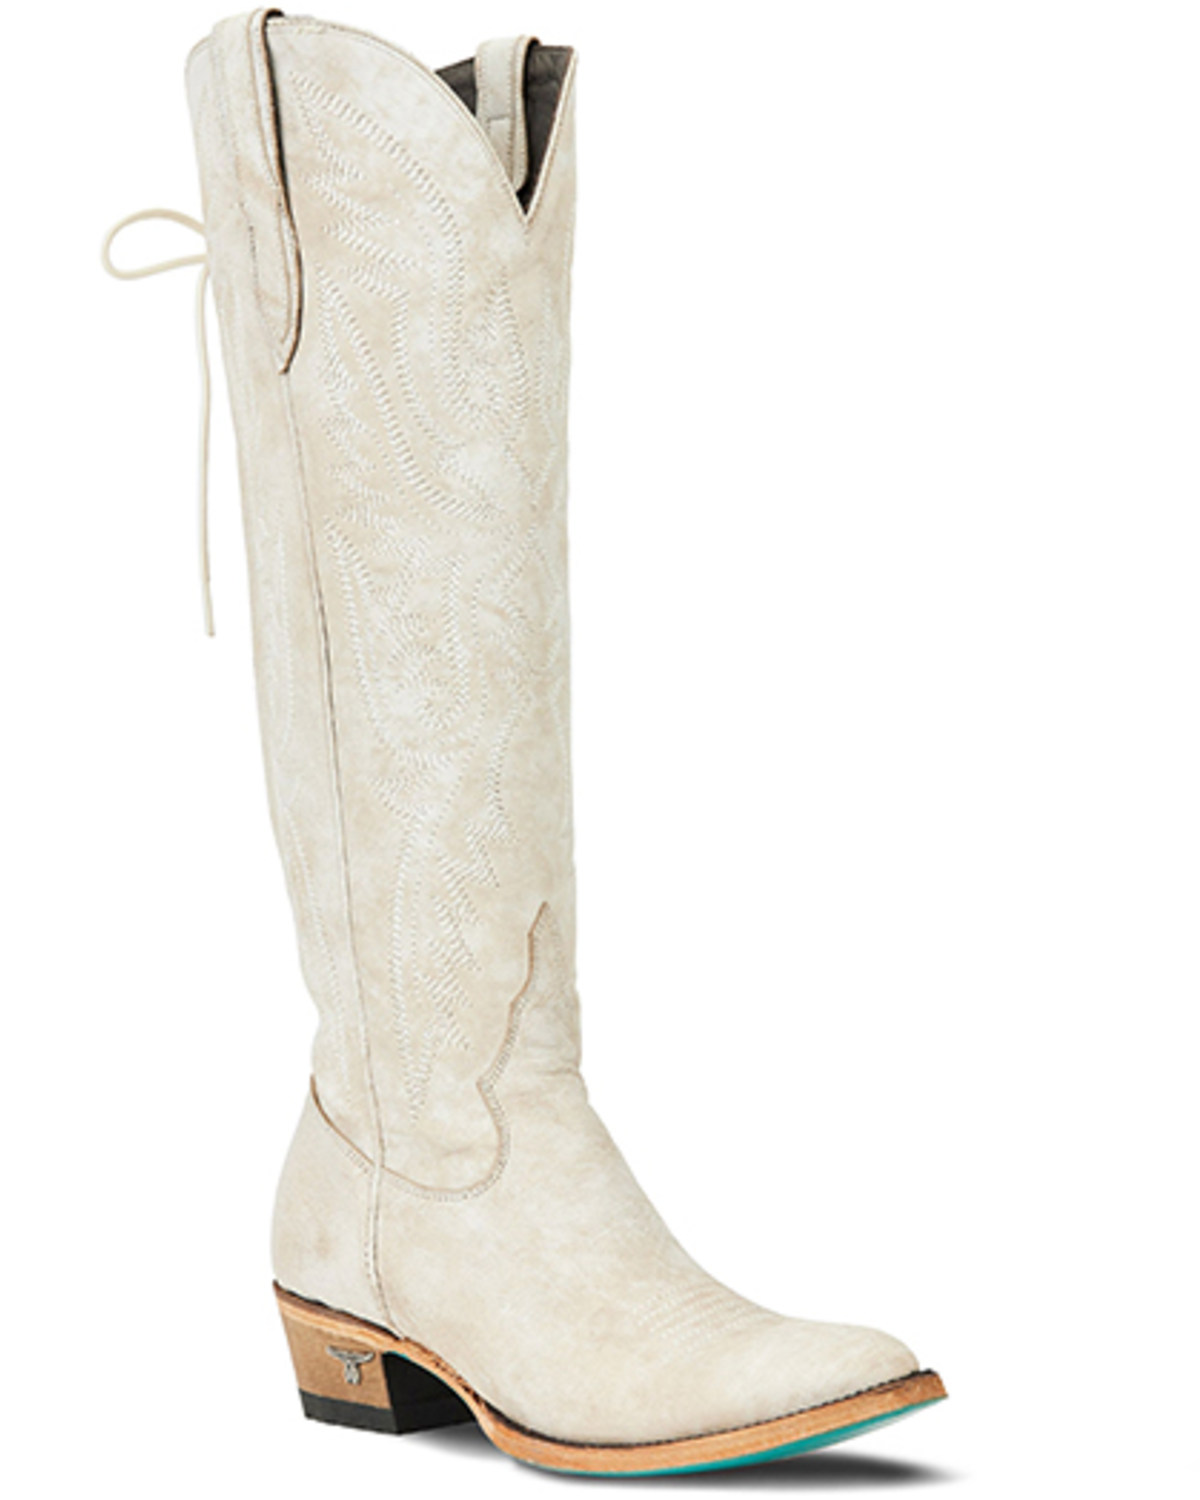 Lane Women's Monica Tall Western Boots - Medium Toe